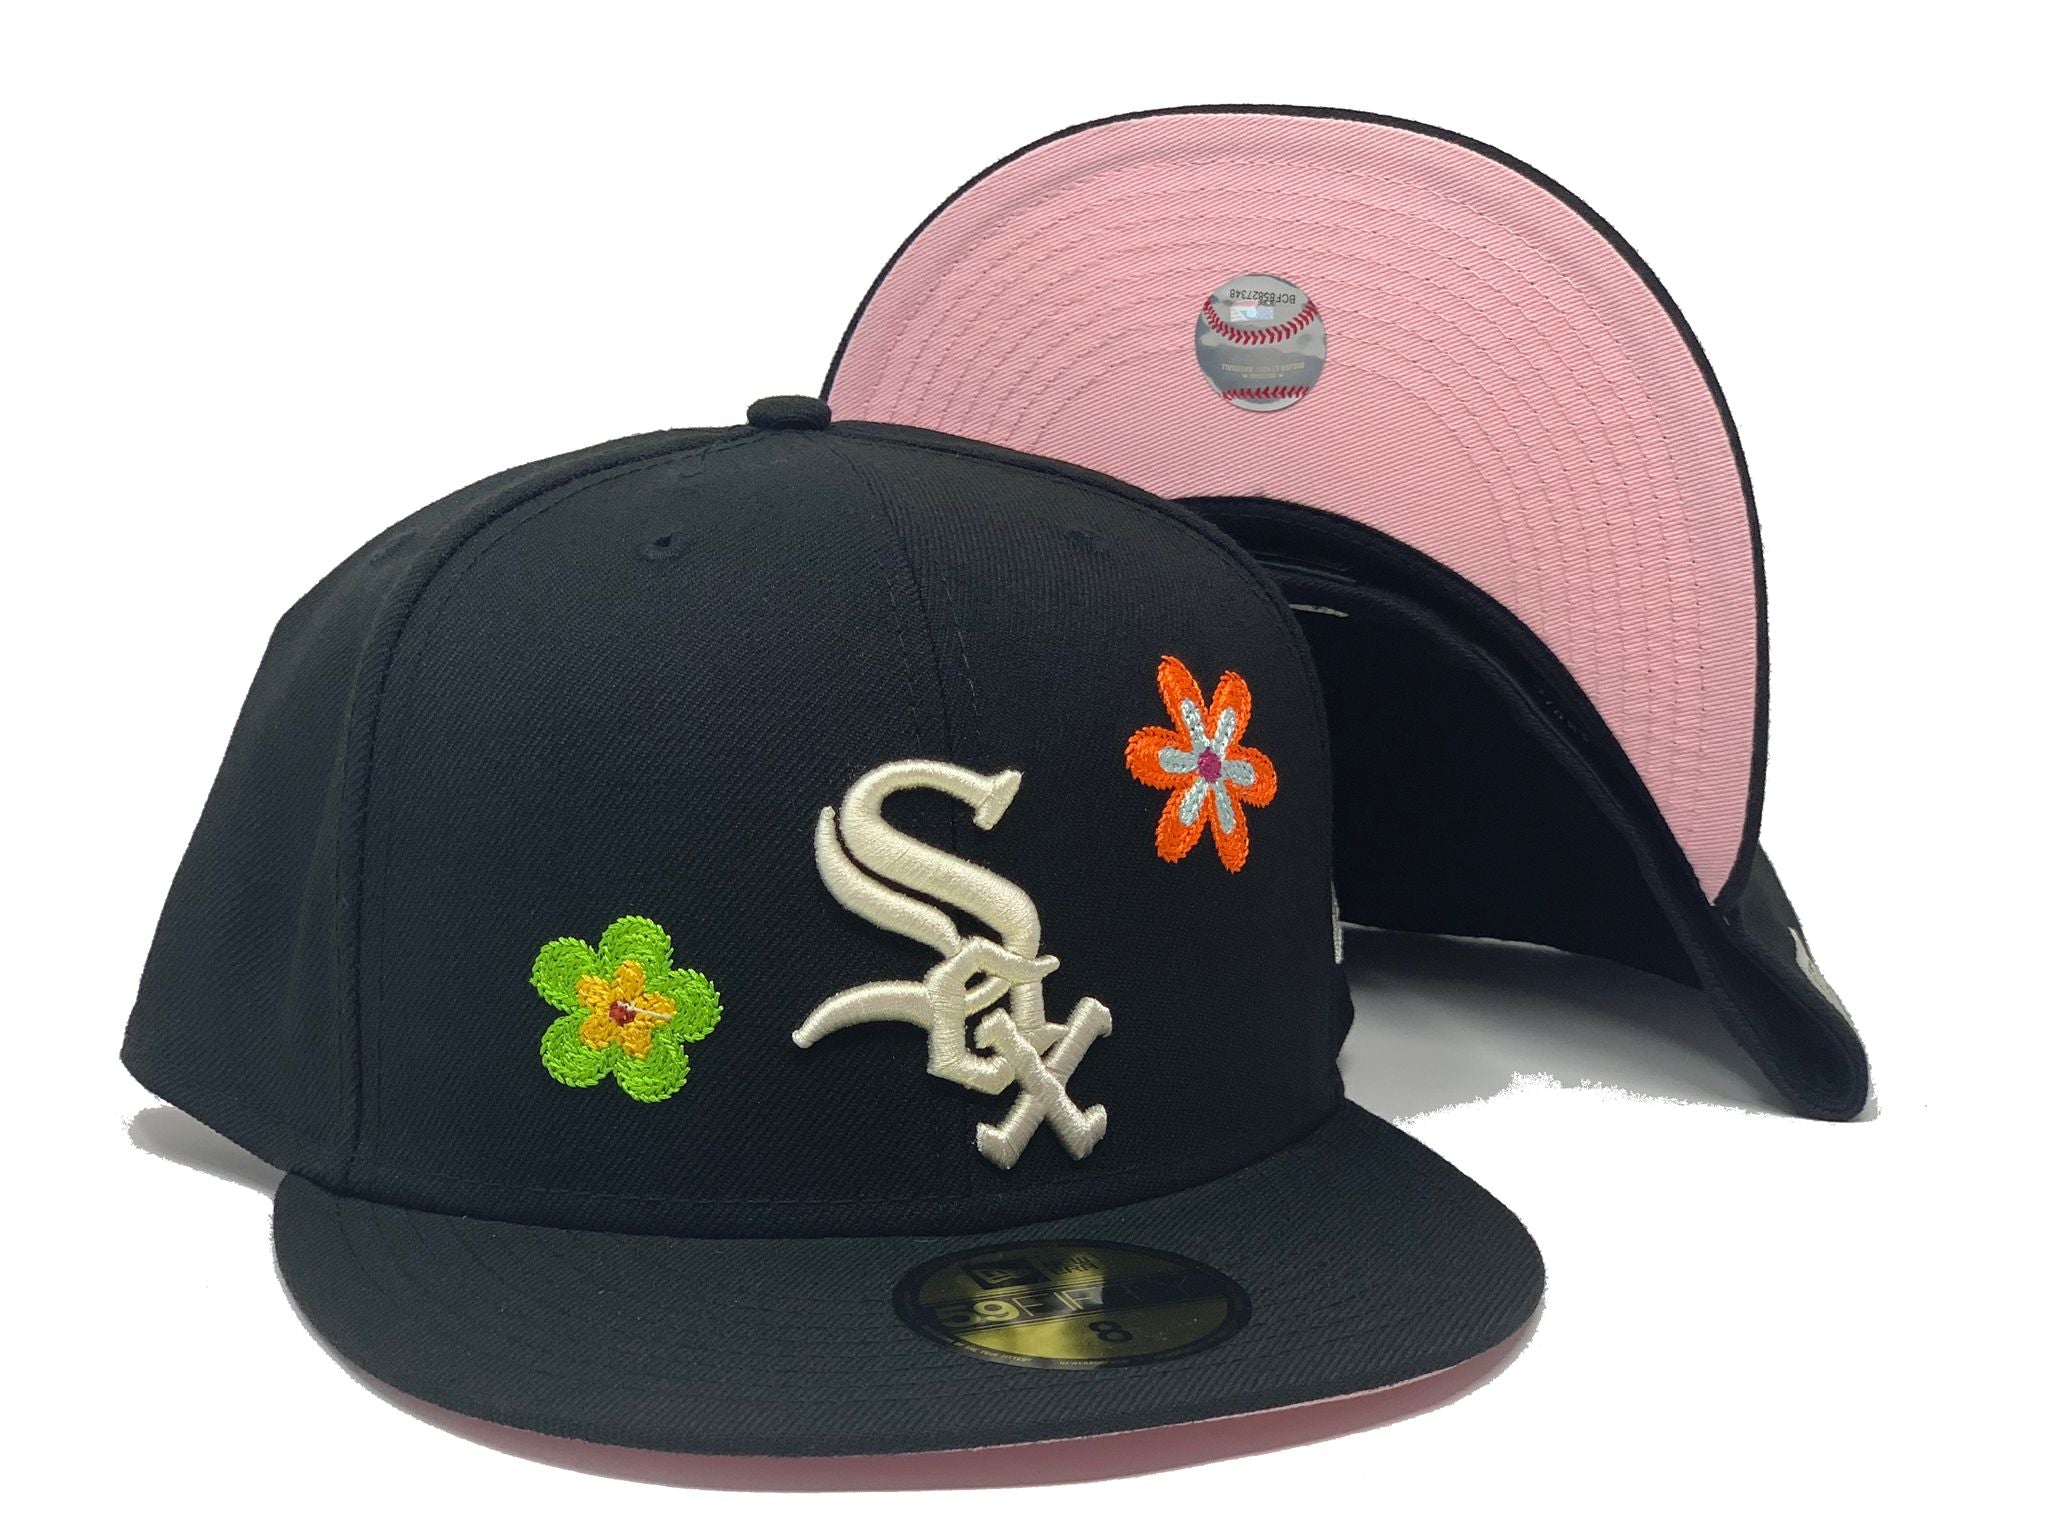 NEW ERA - Men - Chicago White Sox State Flower Tee - Black - Nohble